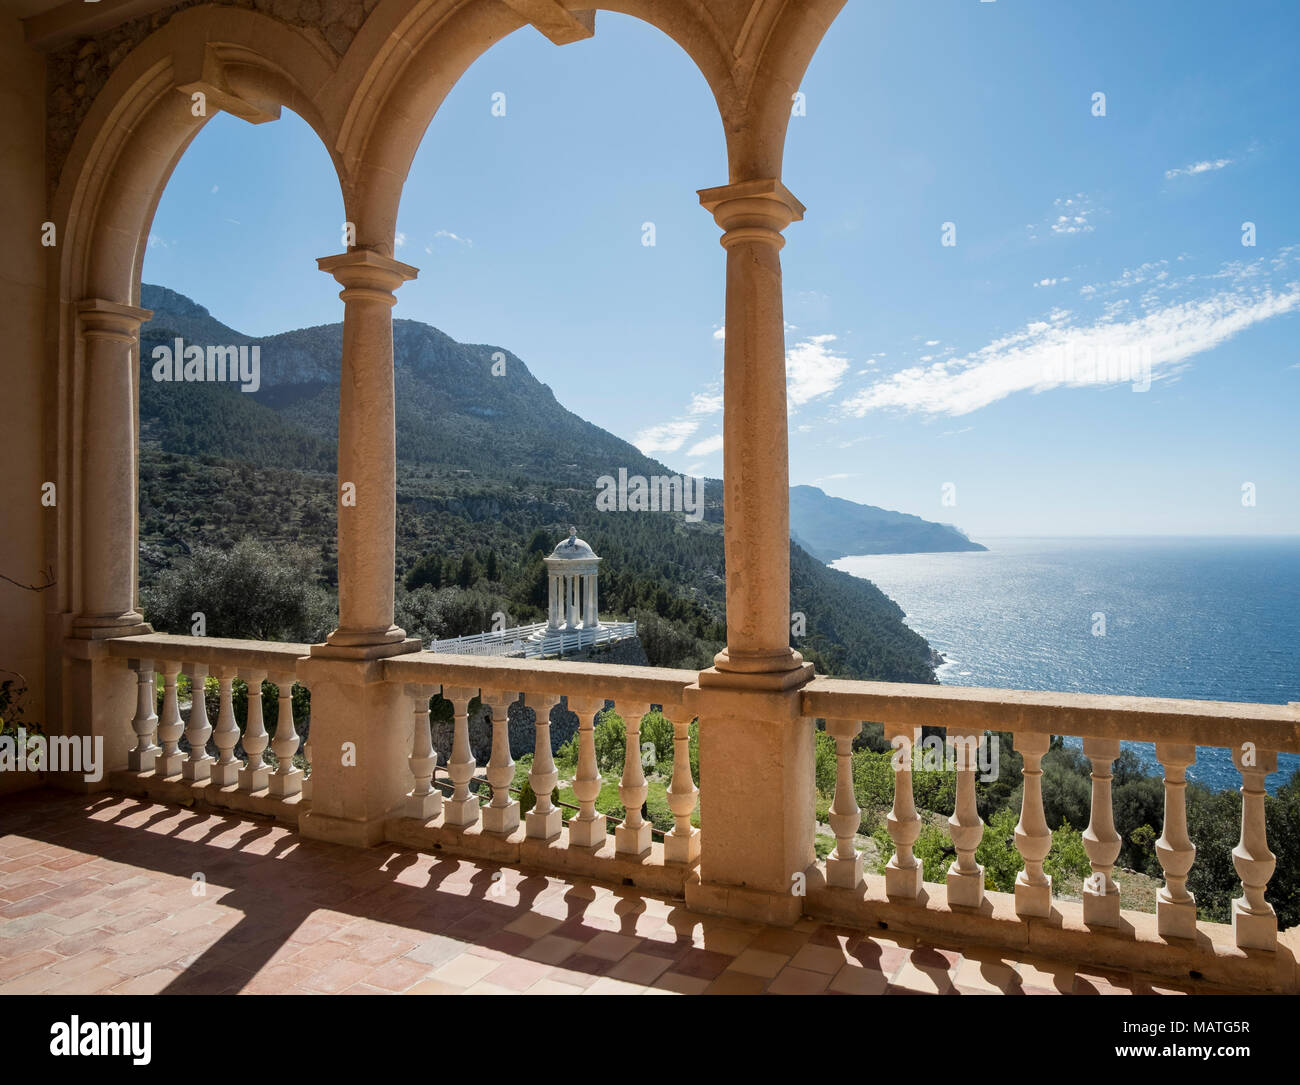 Mallorca, Finca Son Marriog bei Valldemossa, Blick von der Terrasse auf den Marmorpavillon Foto Stock